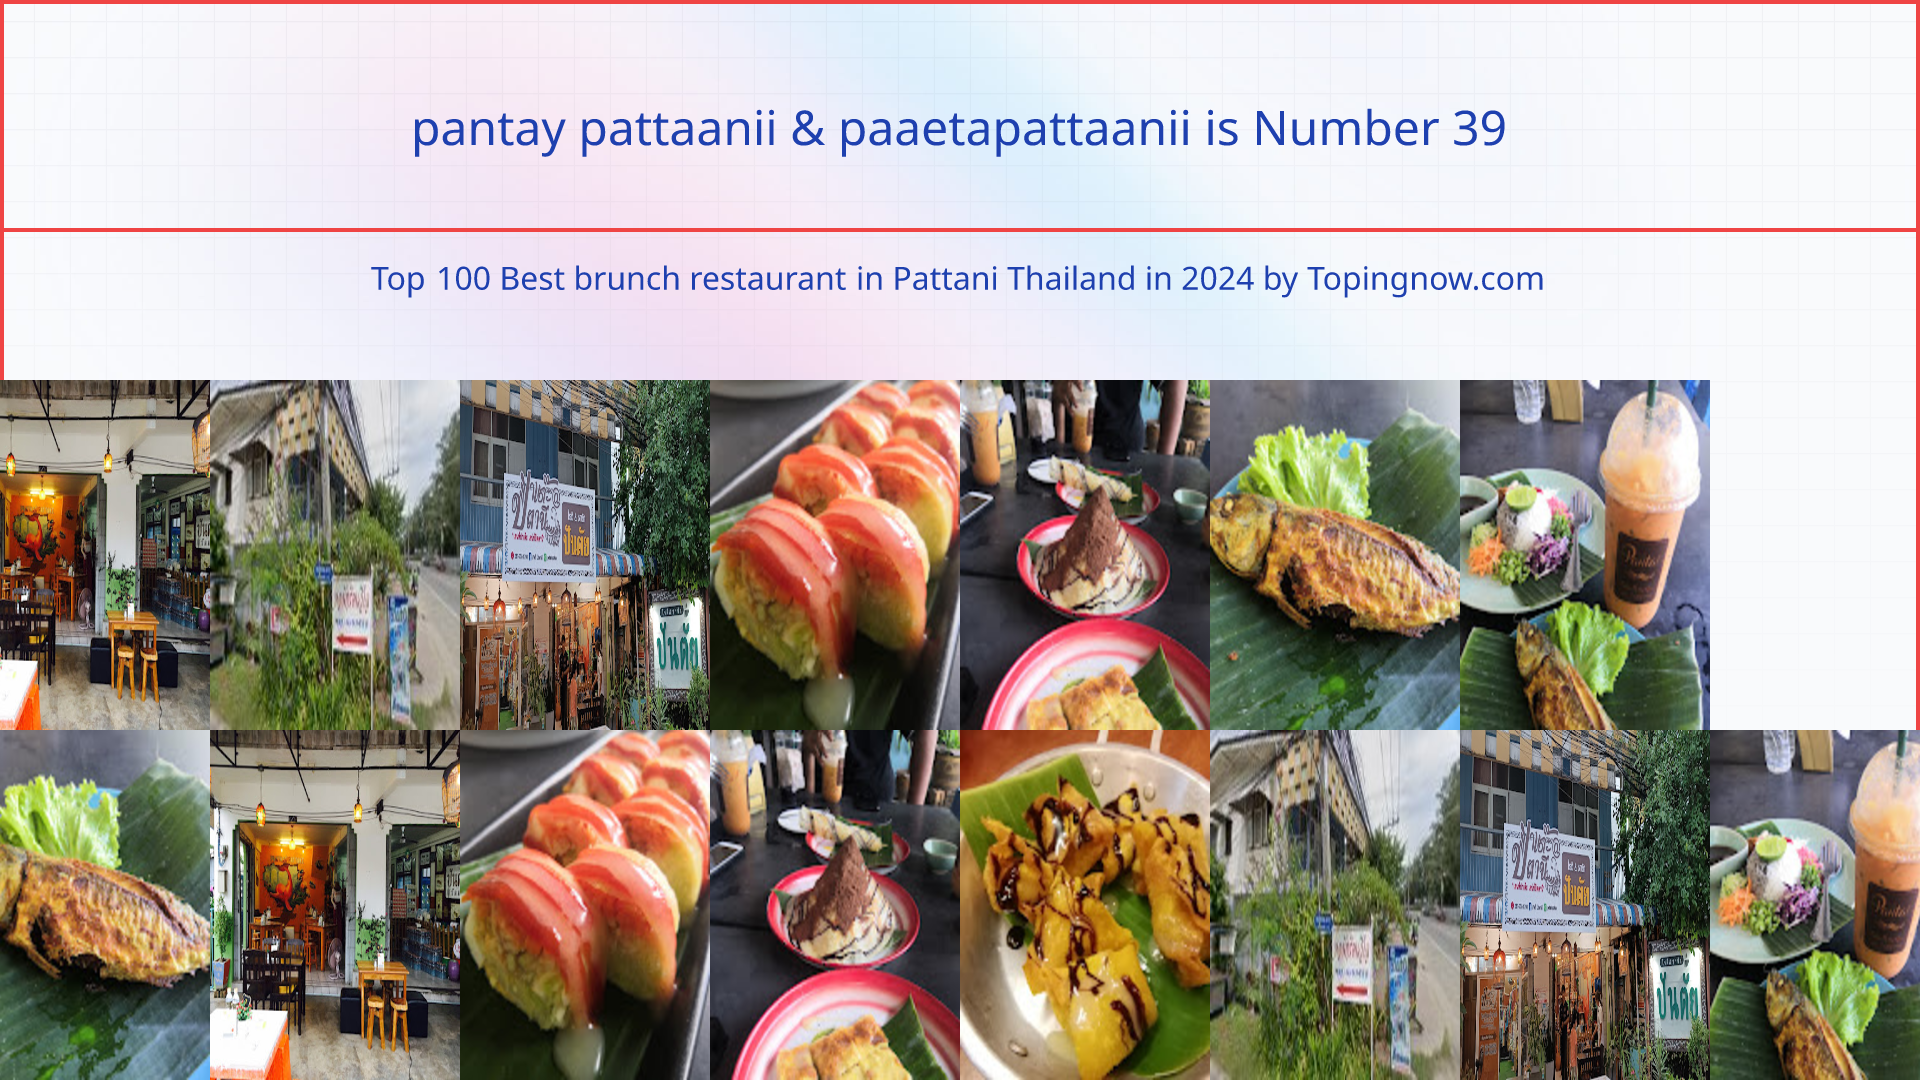 pantay pattaanii & paaetapattaanii: Top 100 Best brunch restaurant in Pattani Thailand in 2024